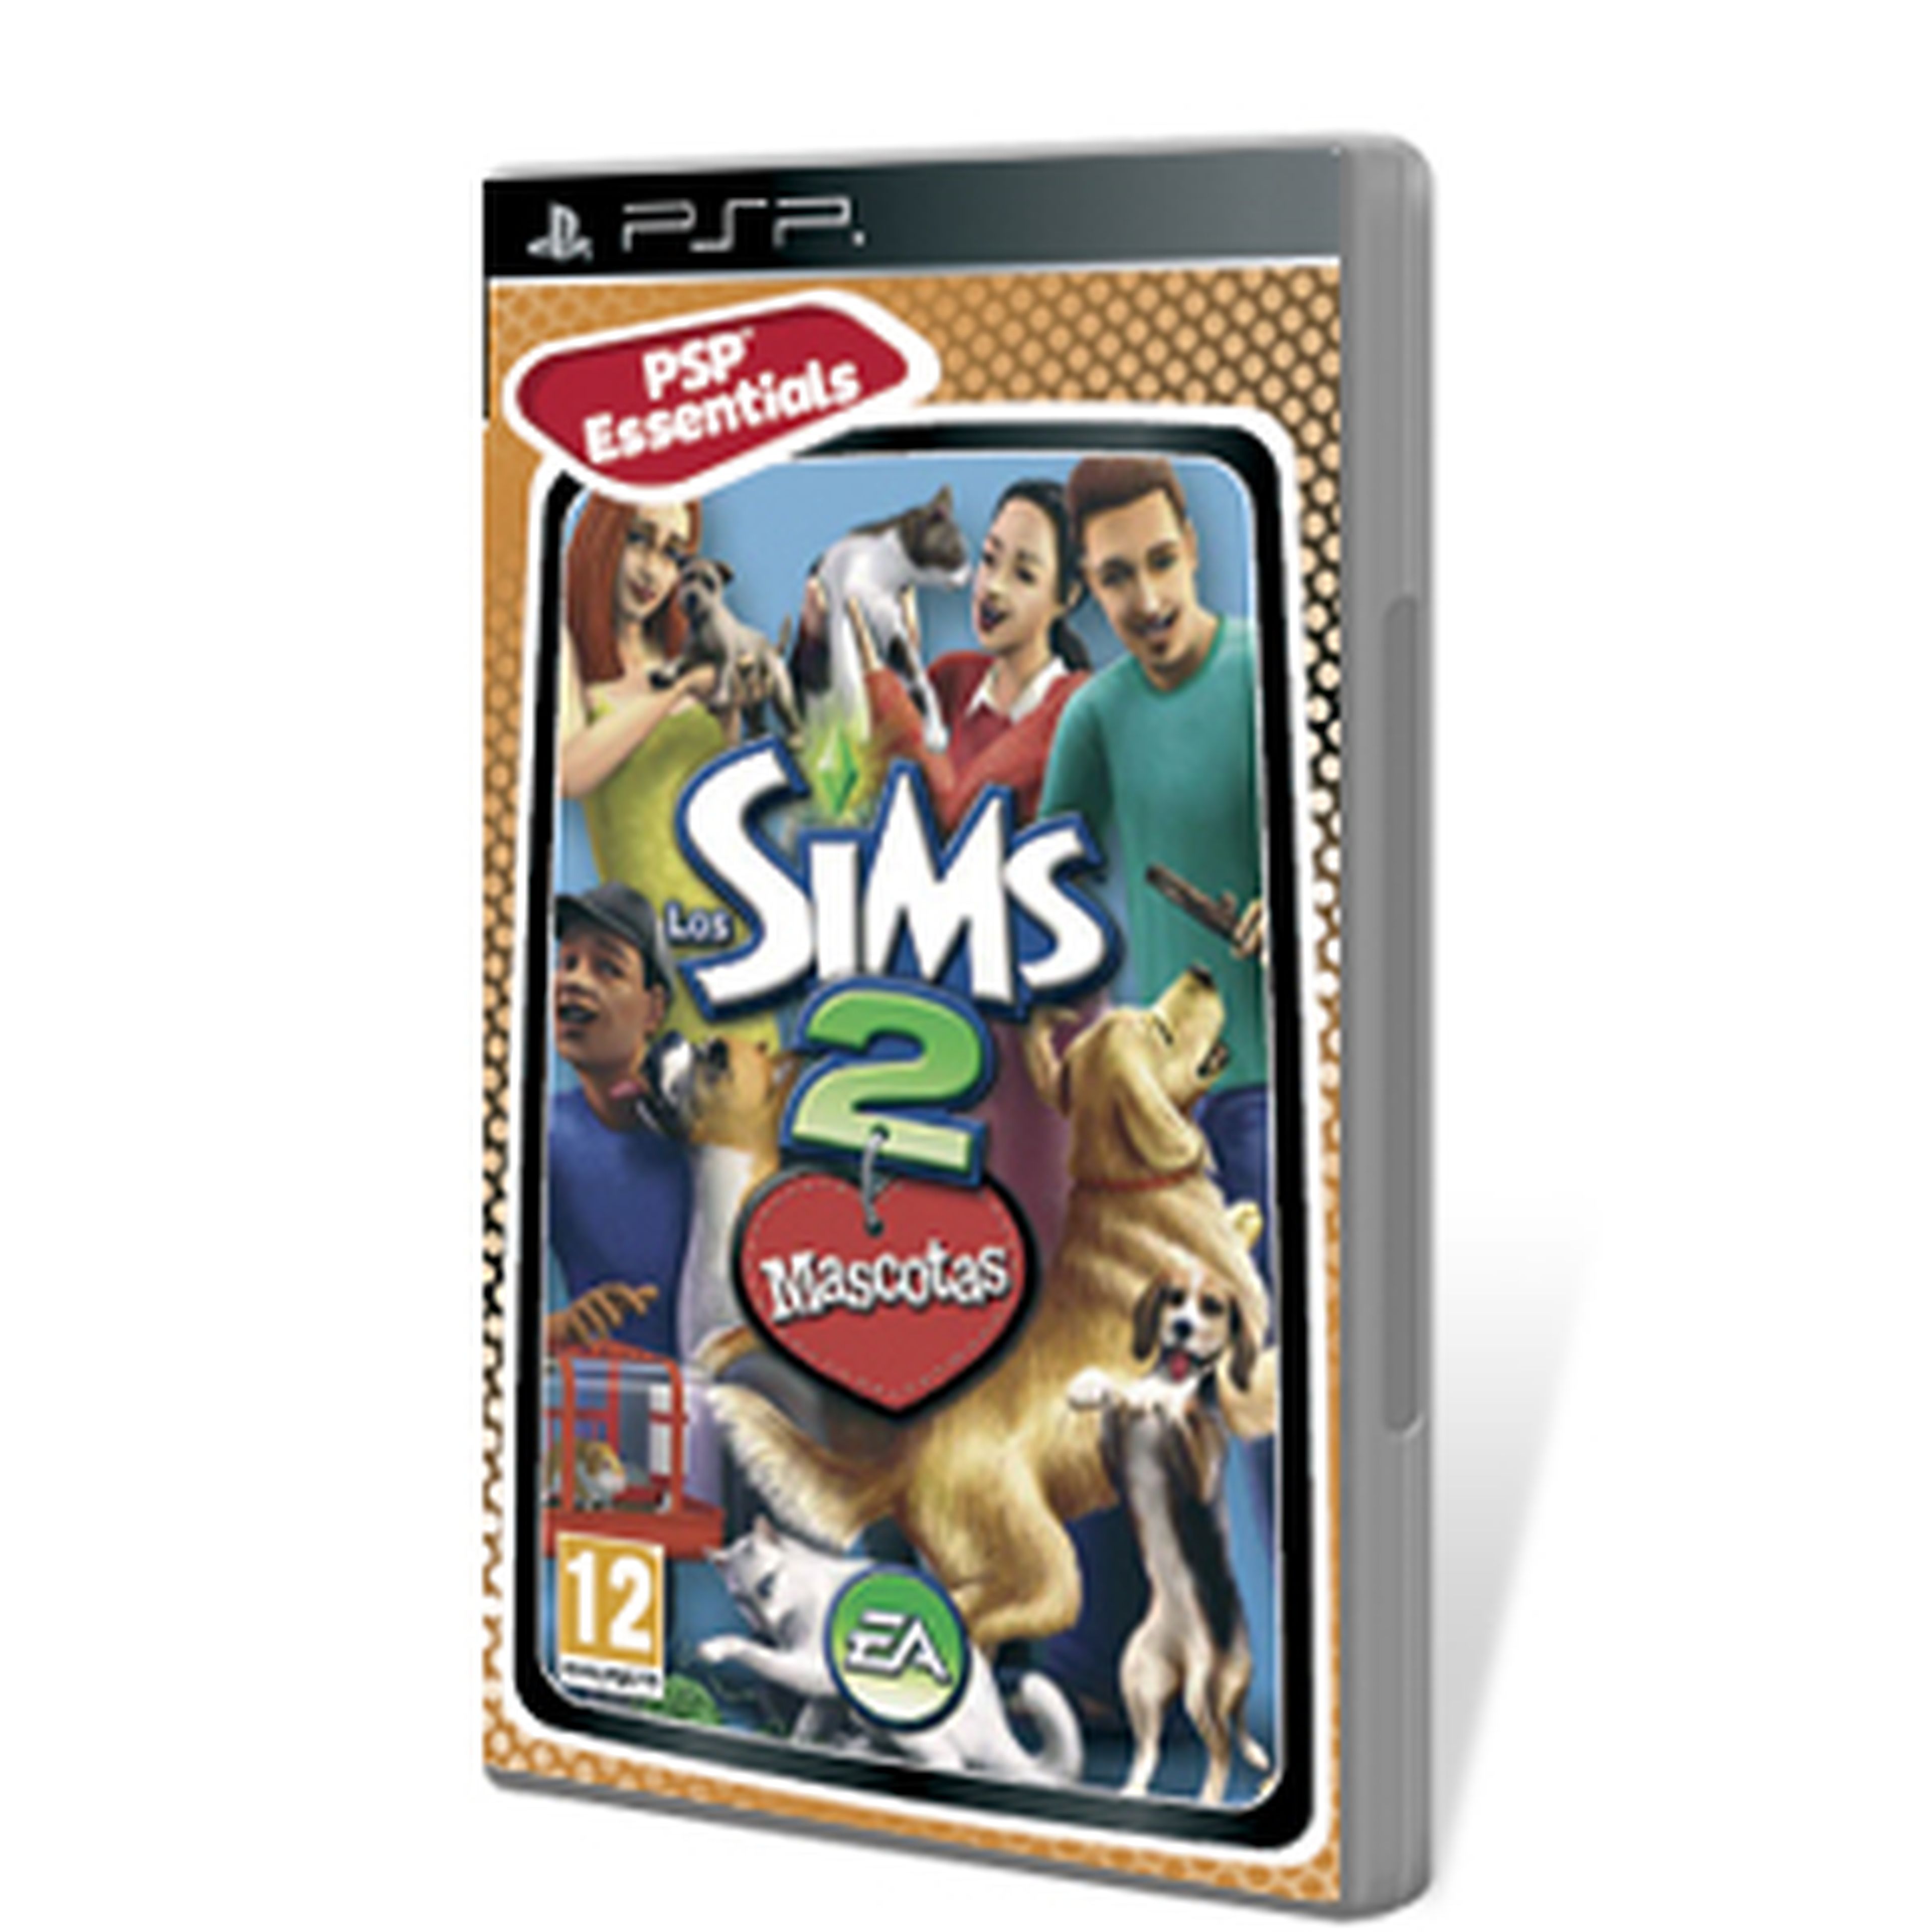 Los Sims 2 Mascotas para PSP